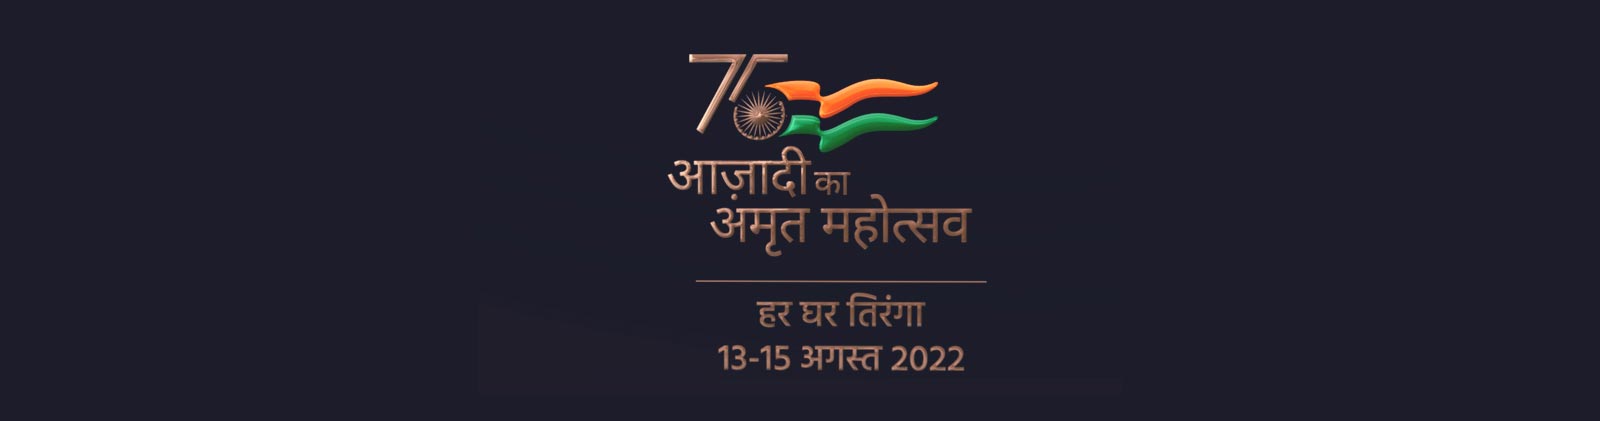 Har Ghar Tiranga Animated Logo